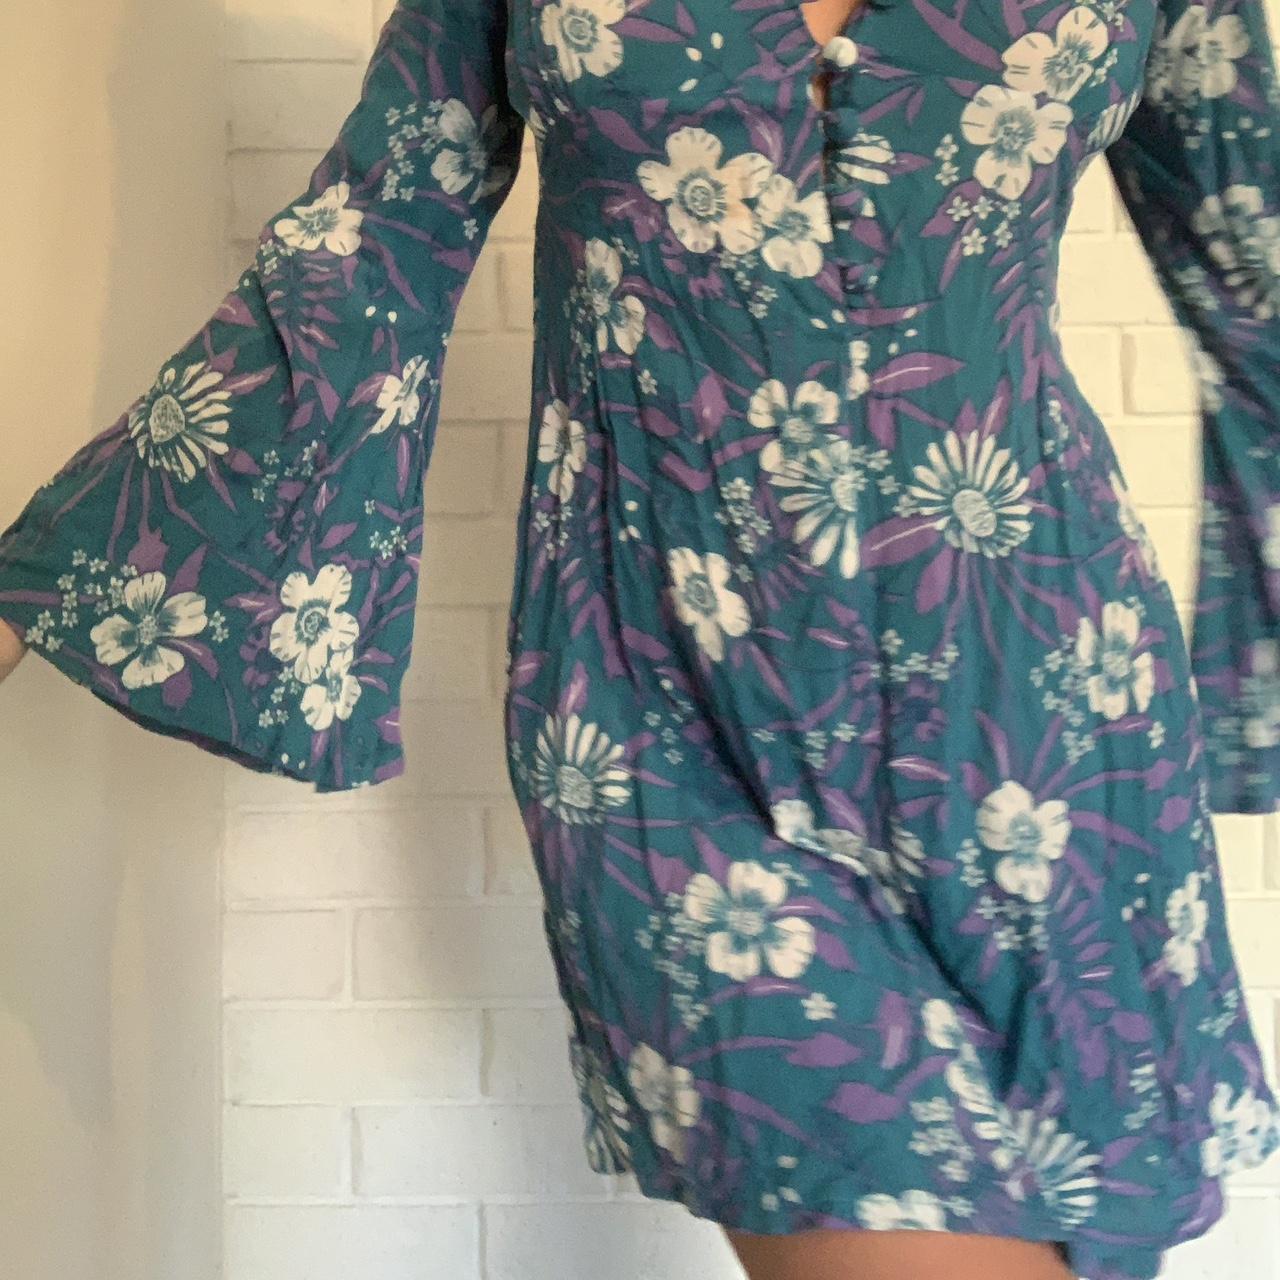 Love street 70s style floral dress 🌺🌺🌺 size XS - Depop